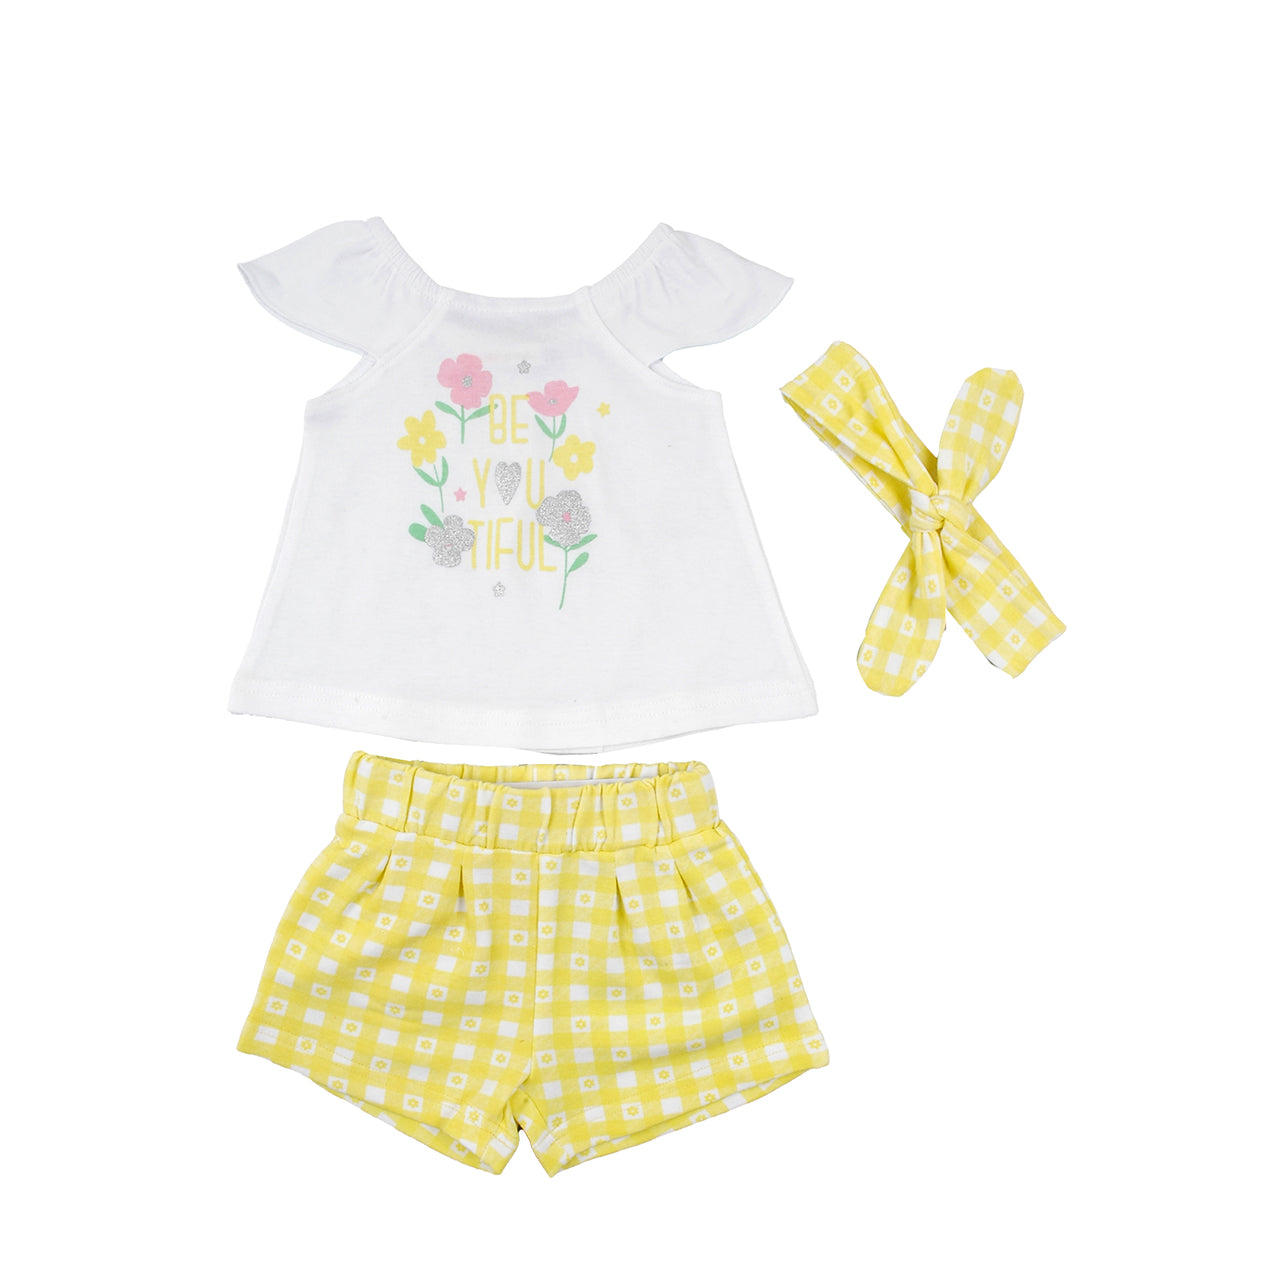 Girls yellow summer shorts set designed in Spain - Adora 